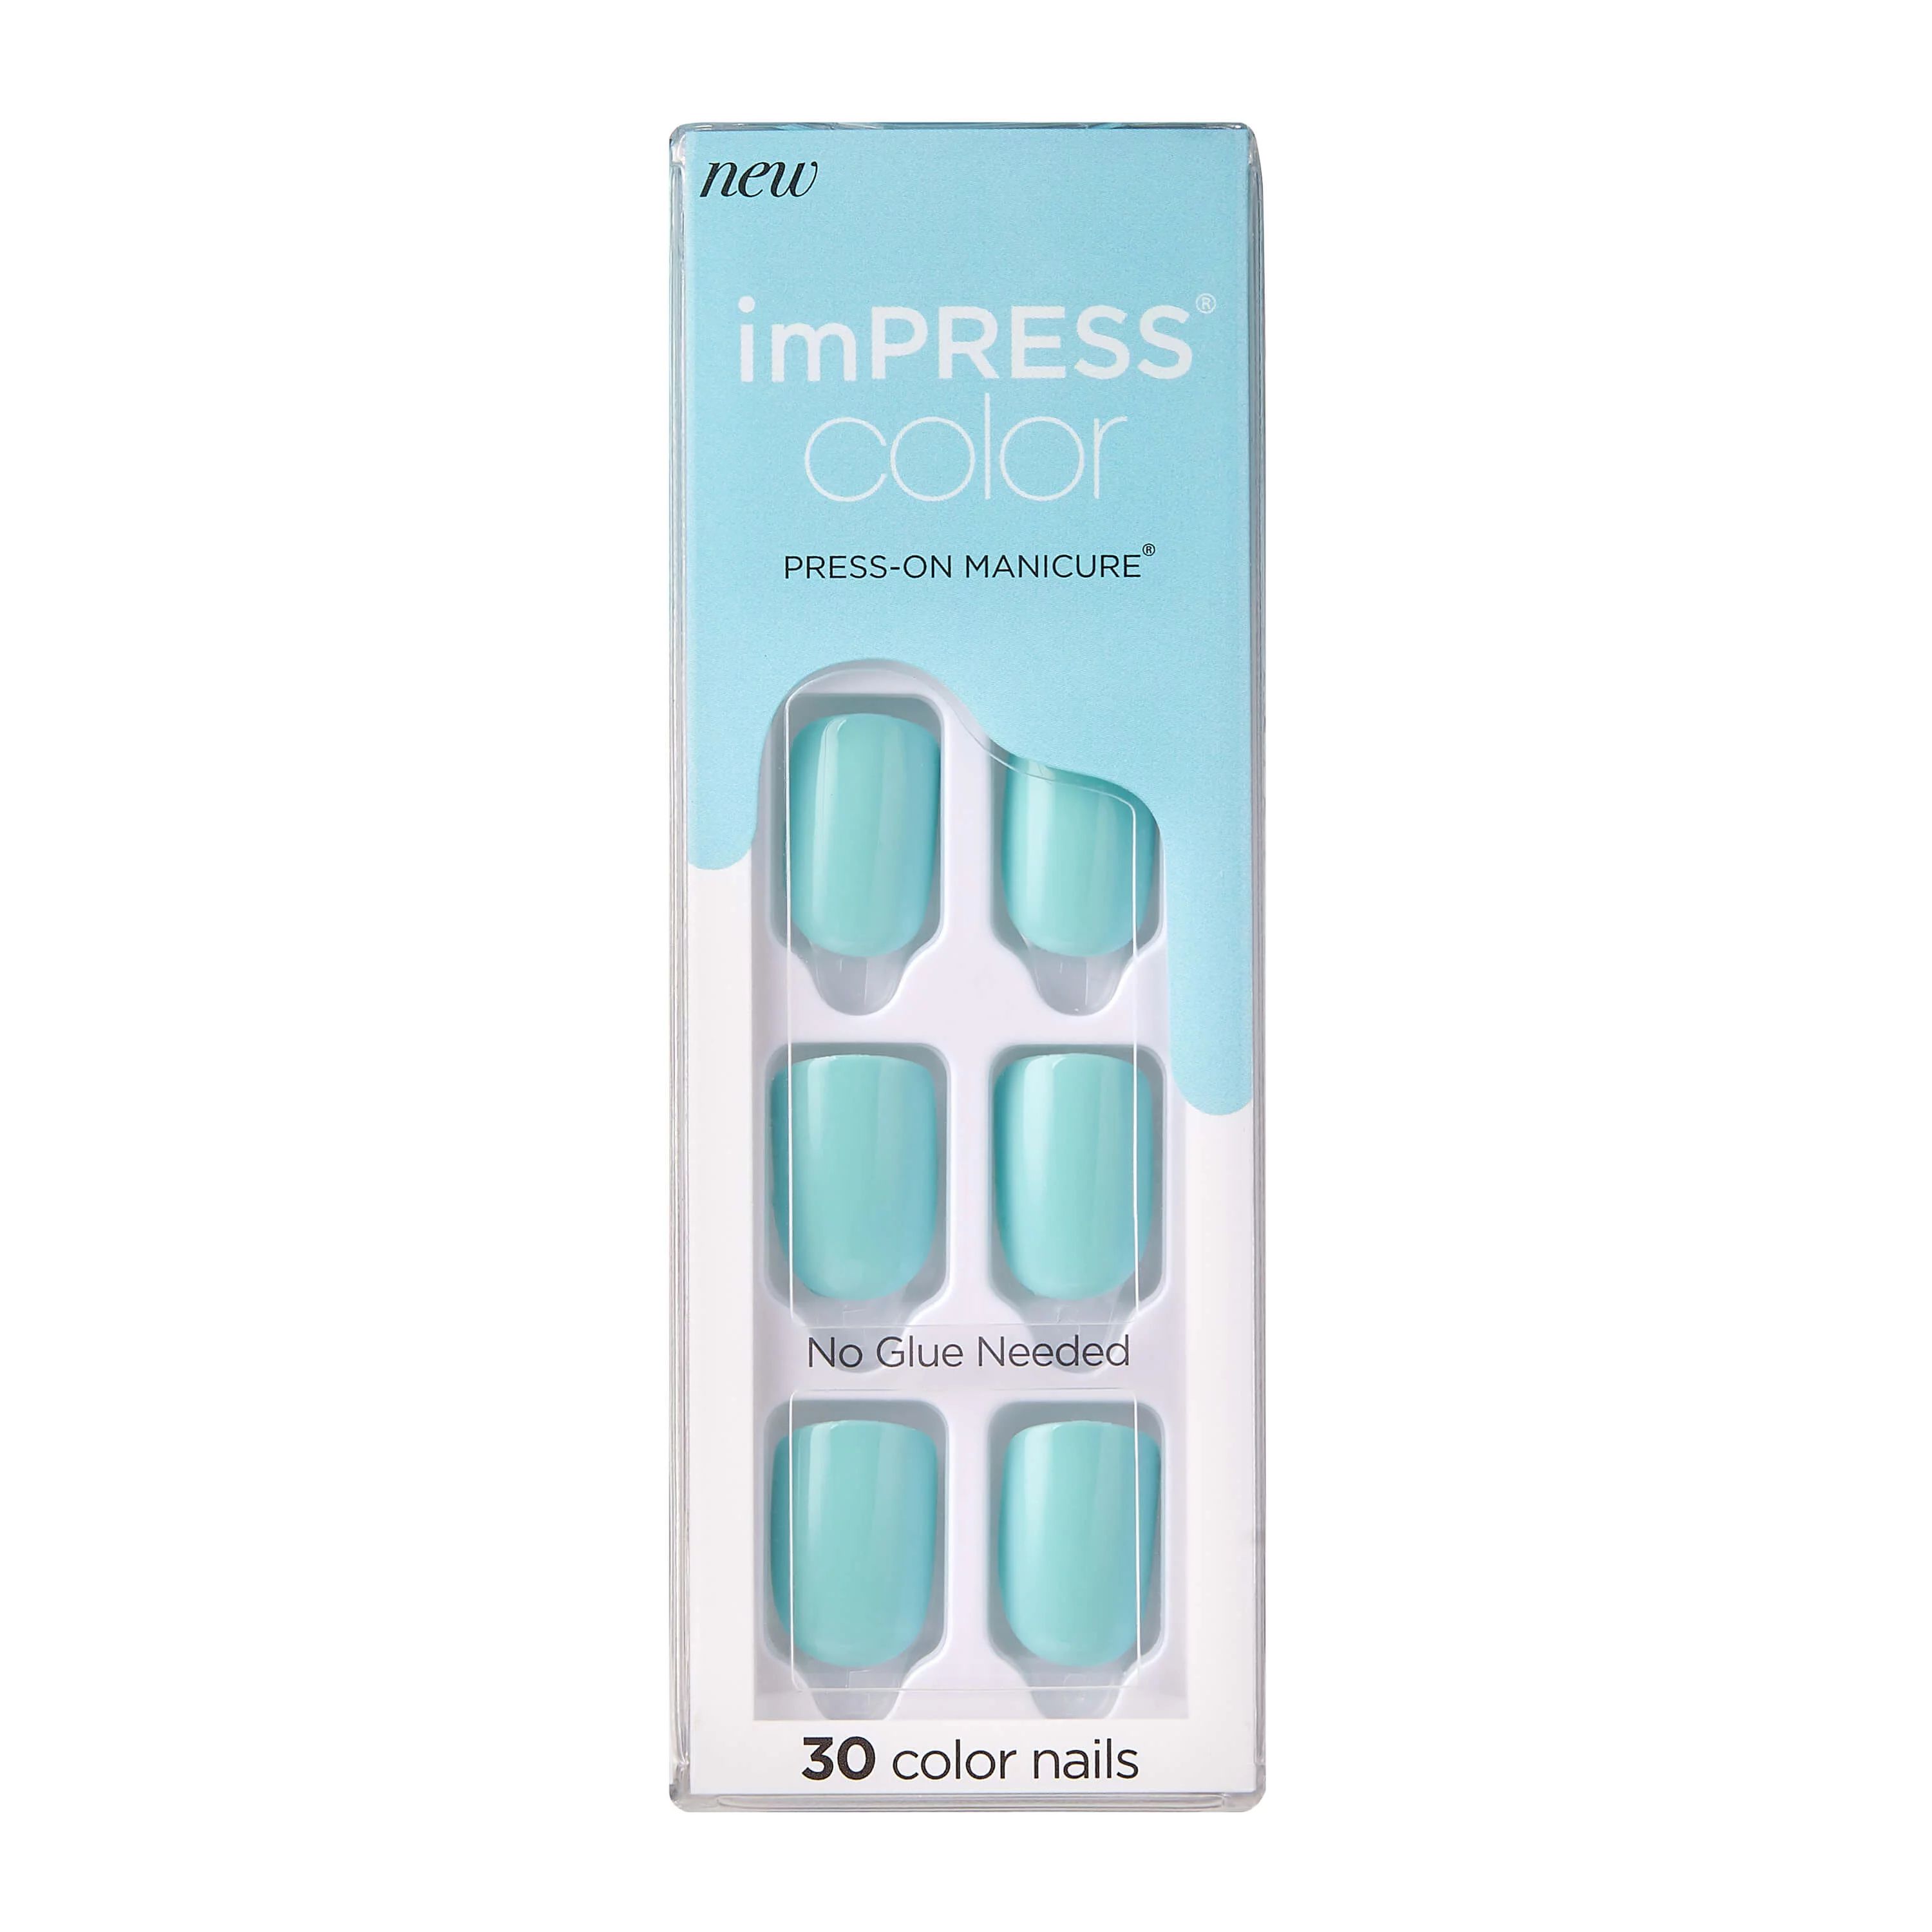 imPRESS Color Press-on Manicure, Mint To Be, Short | Walmart (US)